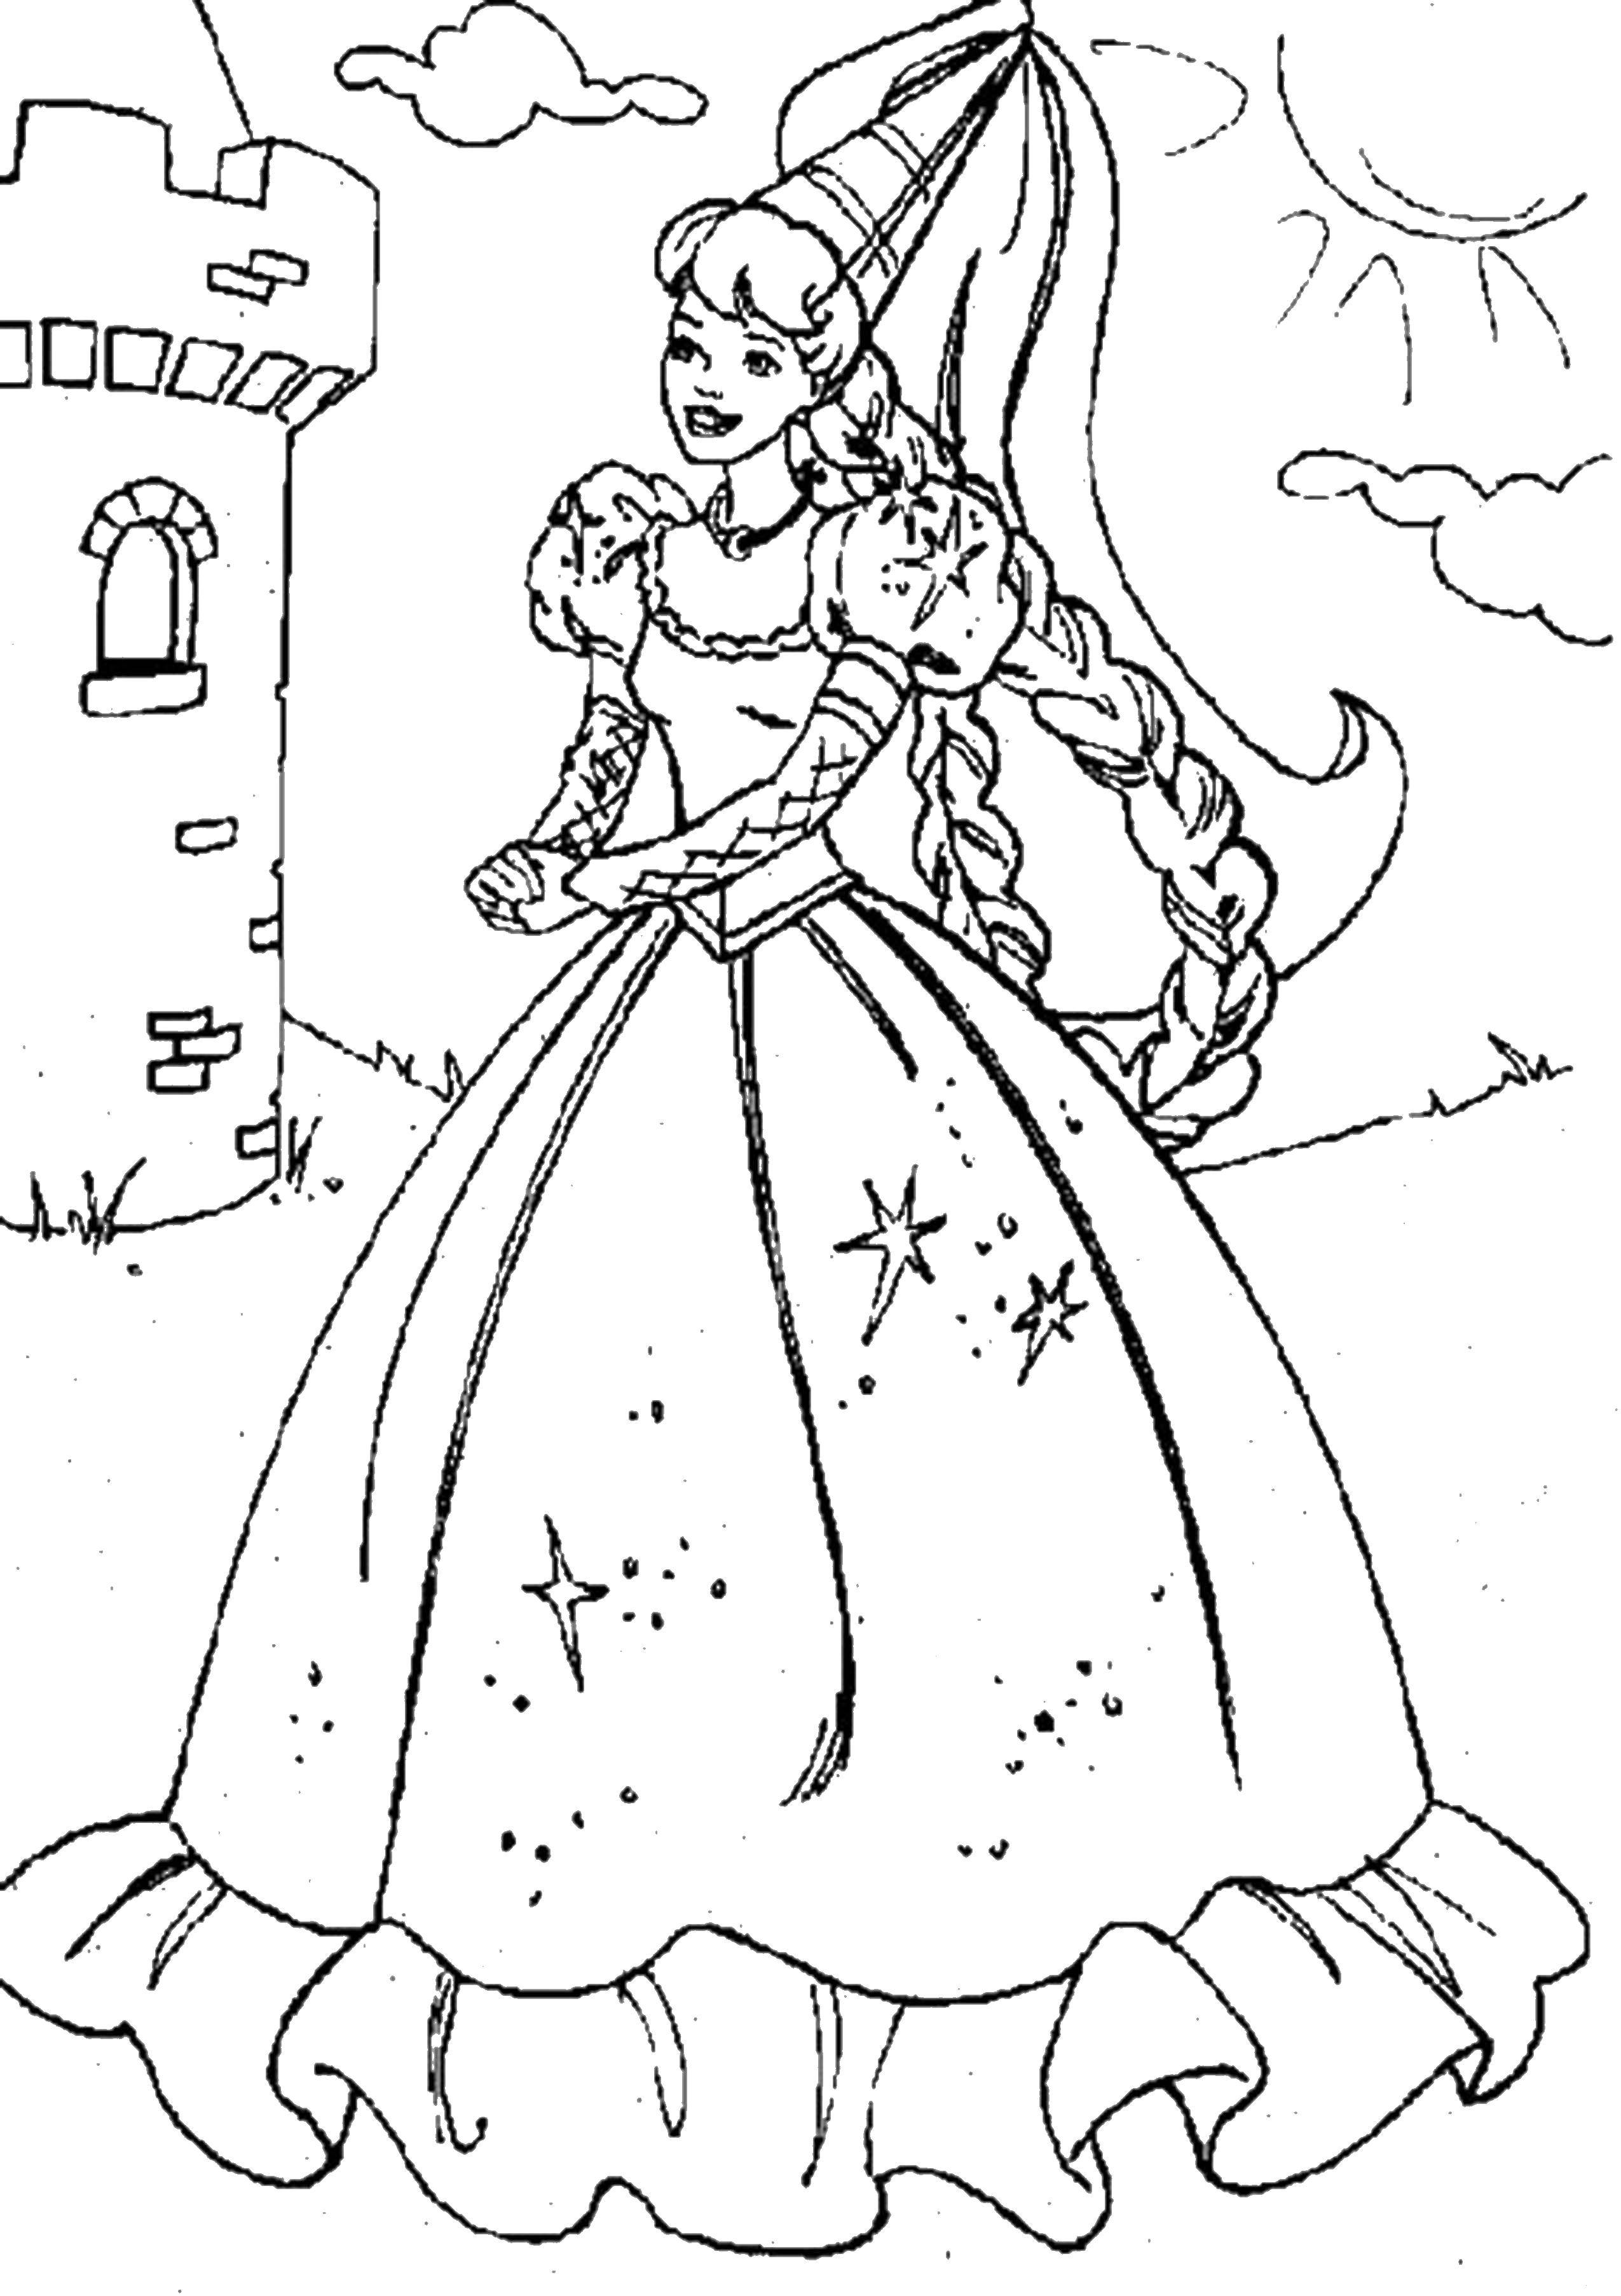 Coloring Magic Princess castle. Category Princess. Tags:  Princess , dress, castle.